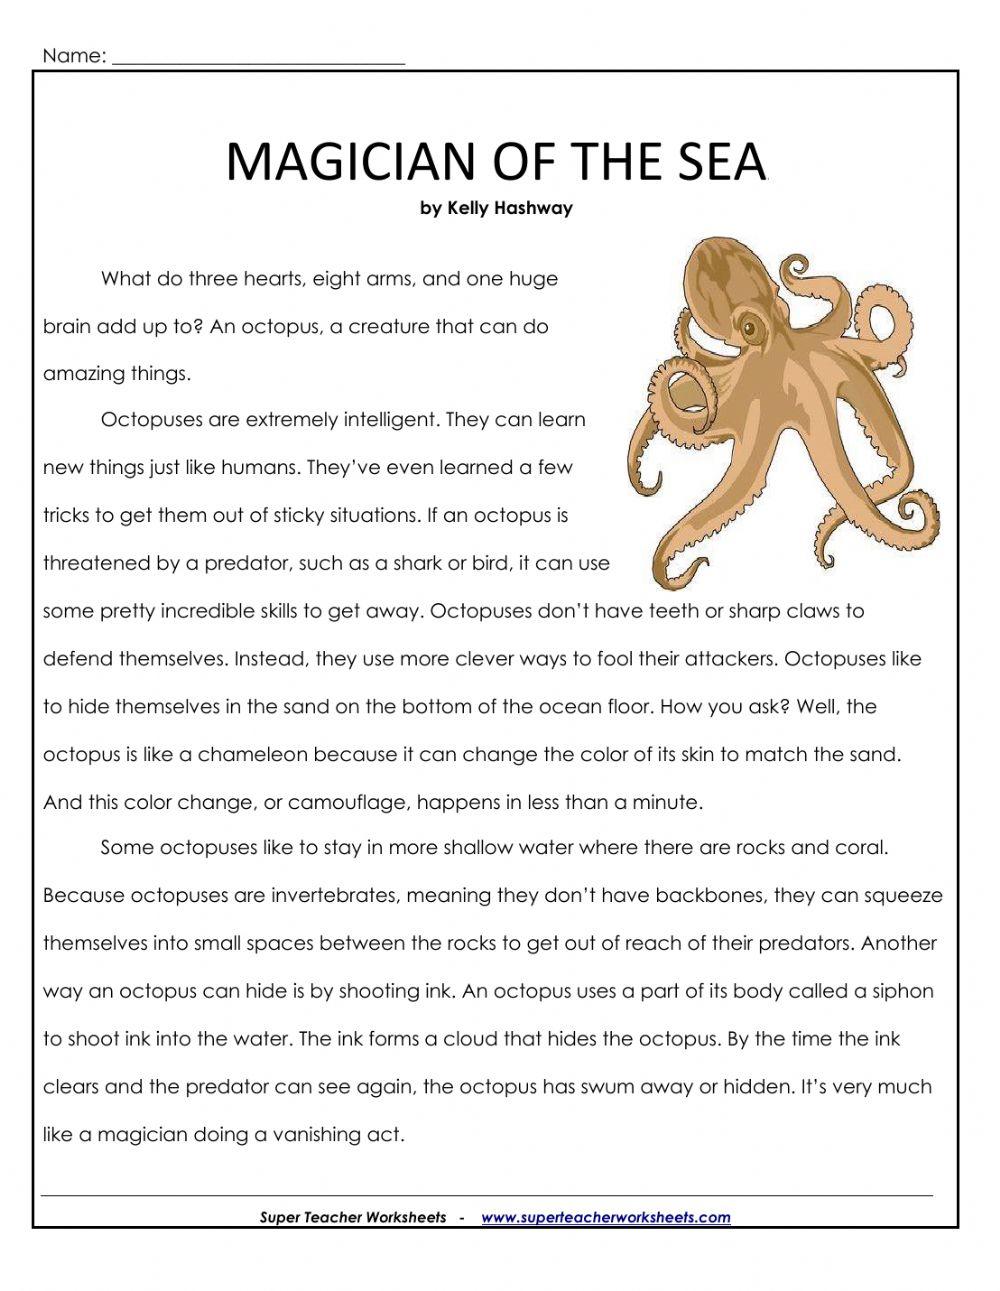 Magician of the Sea